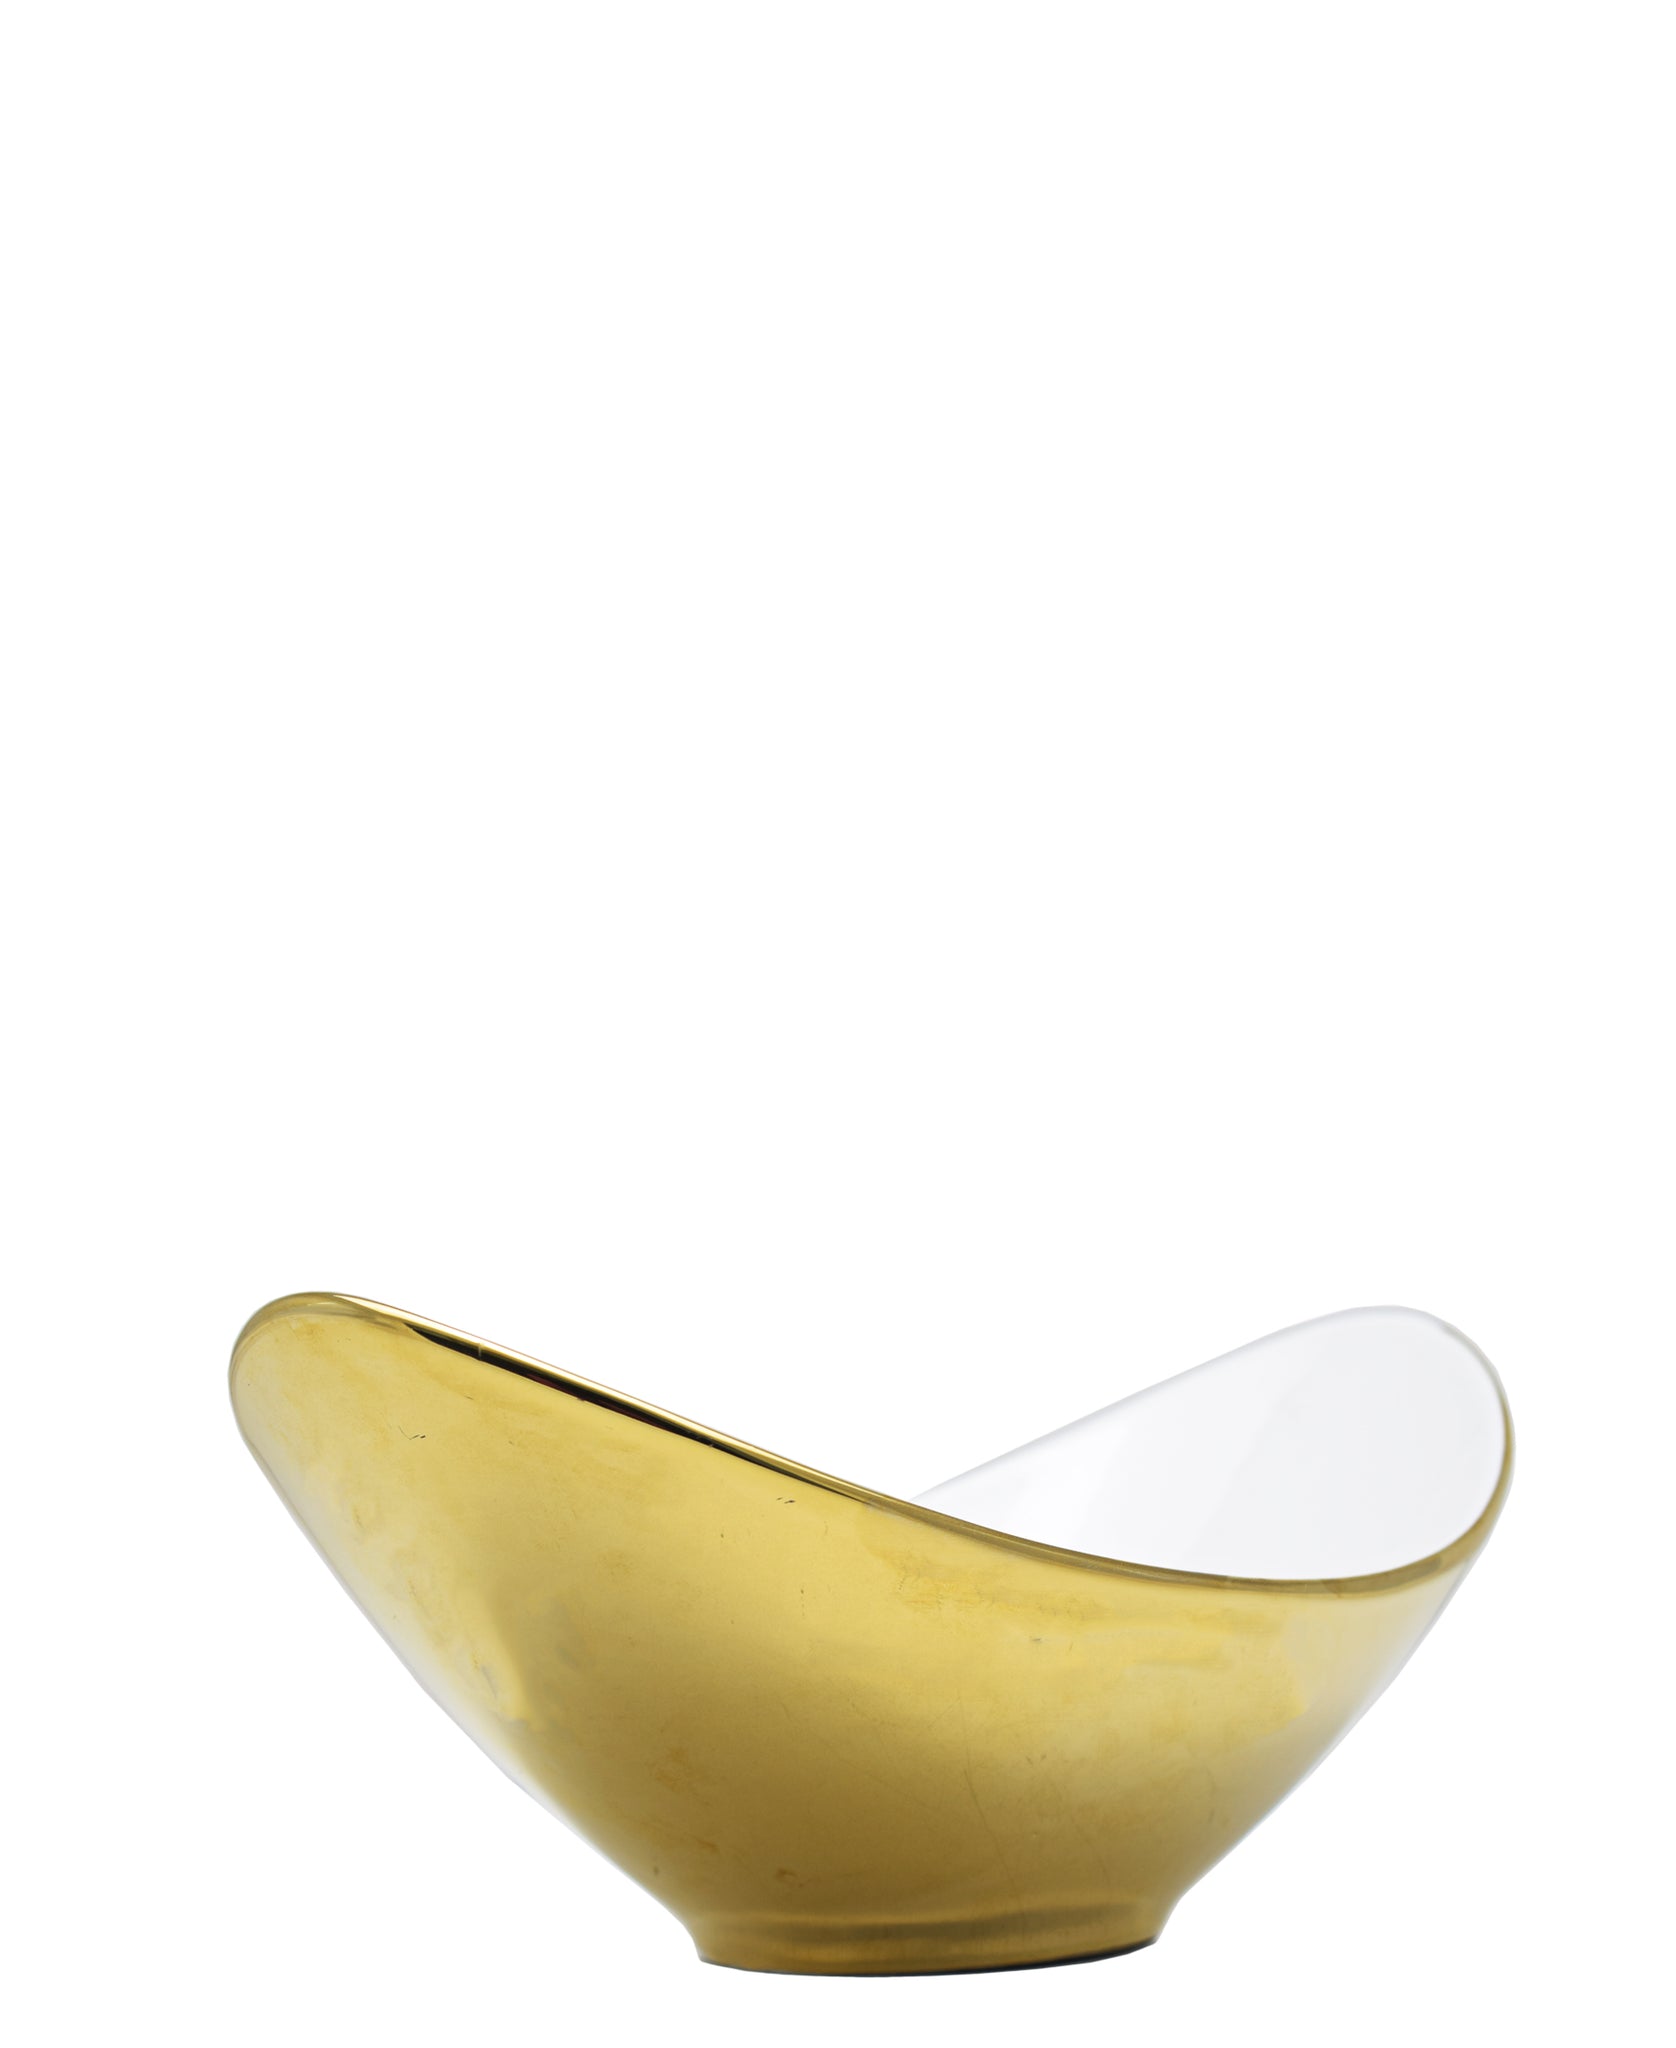 Symphony Adorn Serving Bowl 30cm - White & Gold